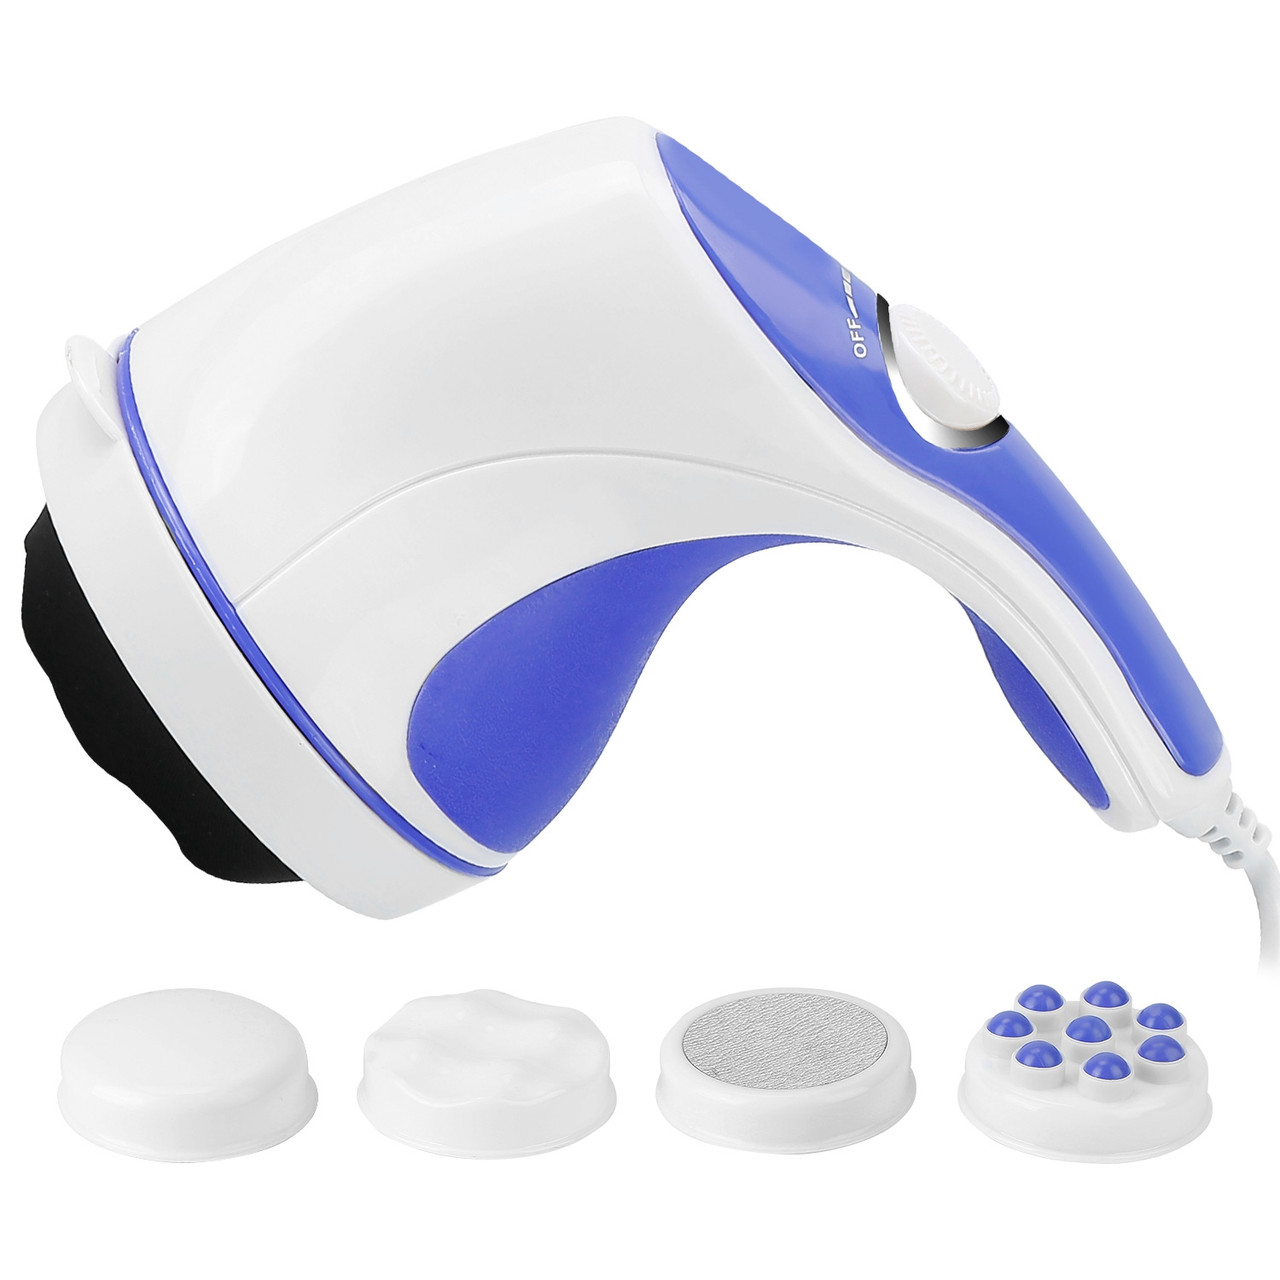 iMounTEK Electric Handheld Body Massager product image